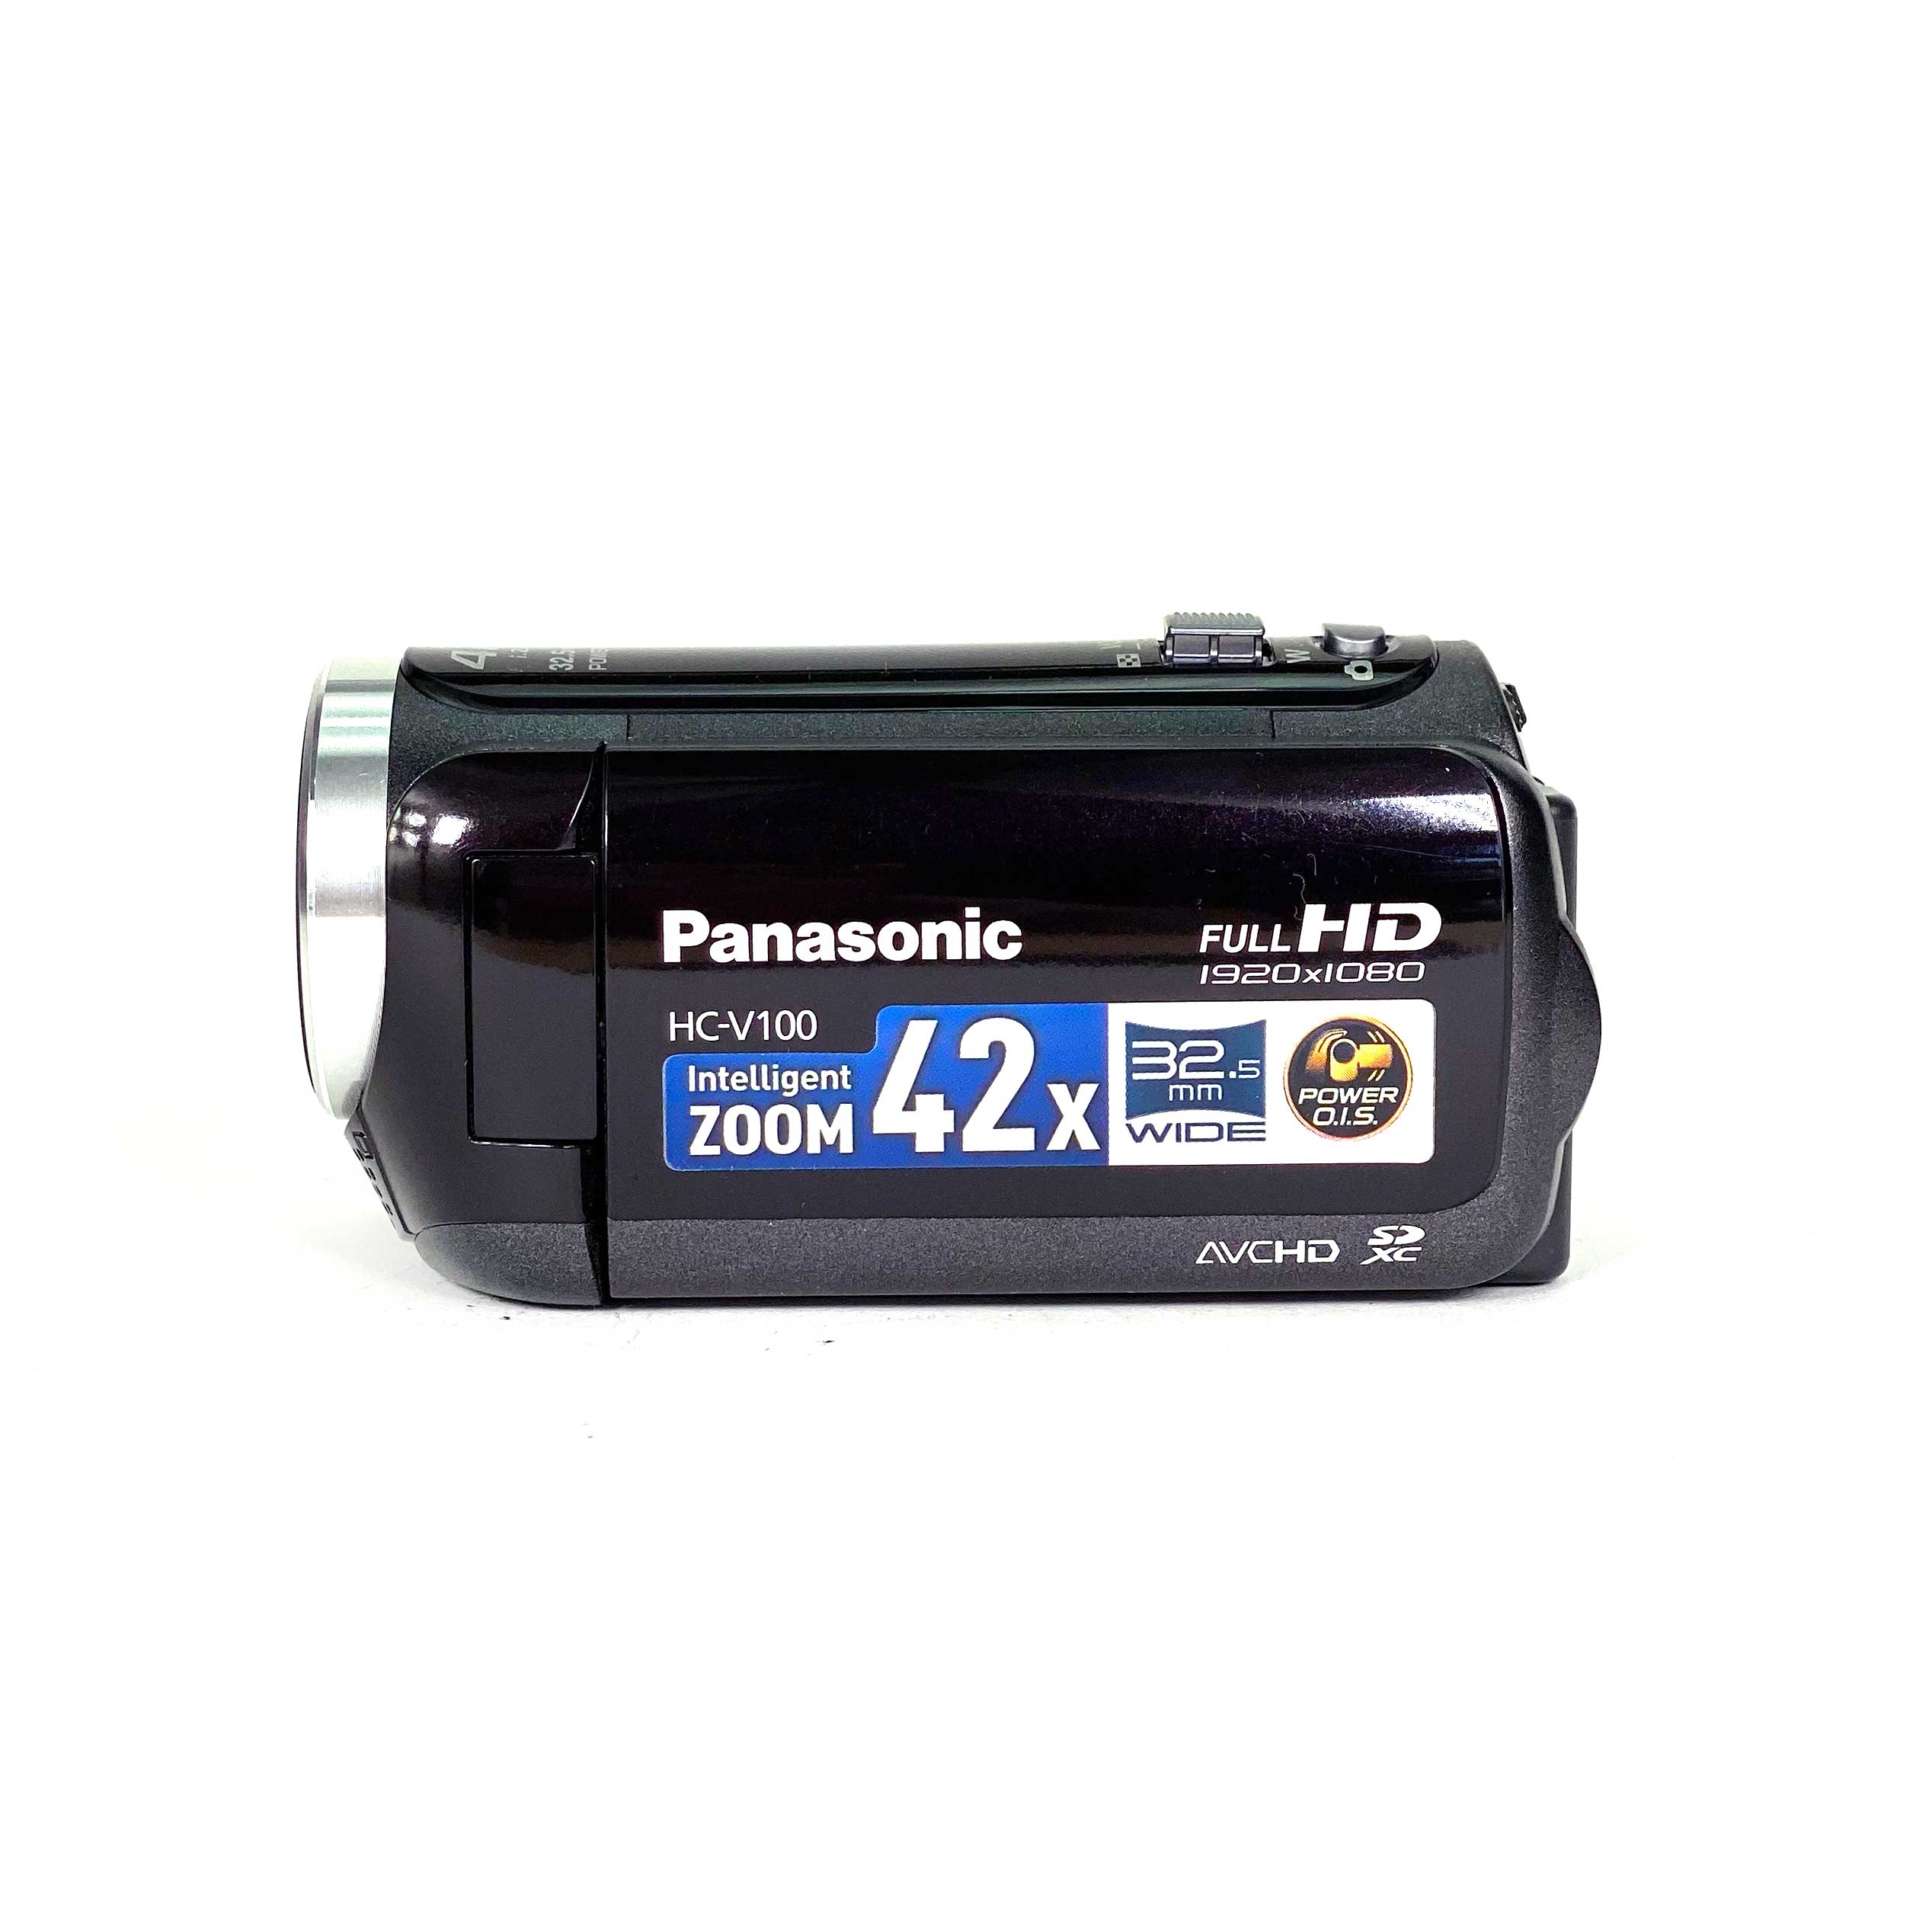 Panasonic HC-V100 HD Camcorder